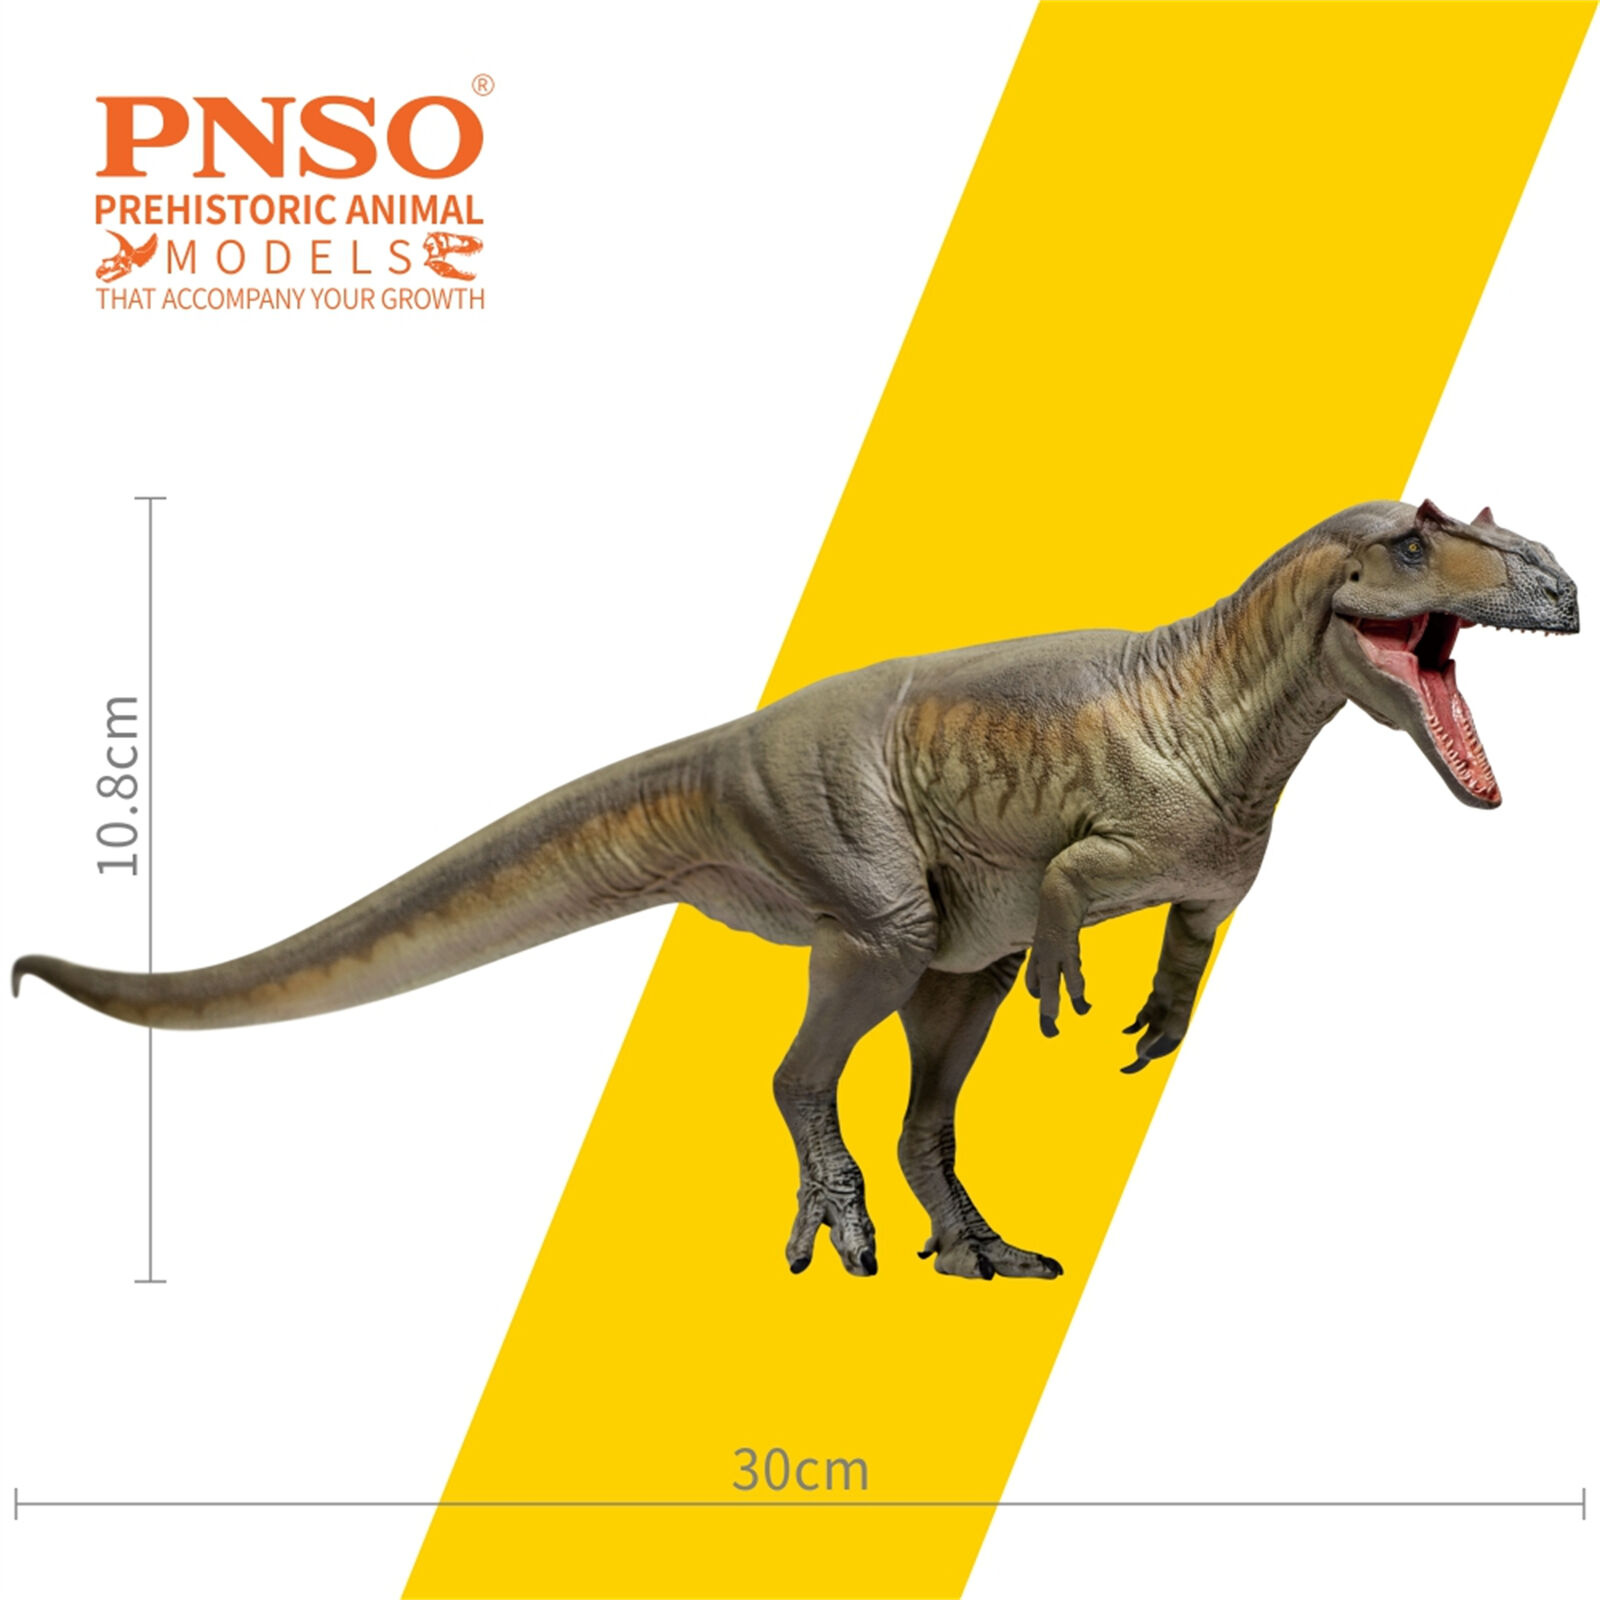 PNSO 75 Saurophaganax Donald Animal Model Prehistoric Dinosaur Decor Gift Toy